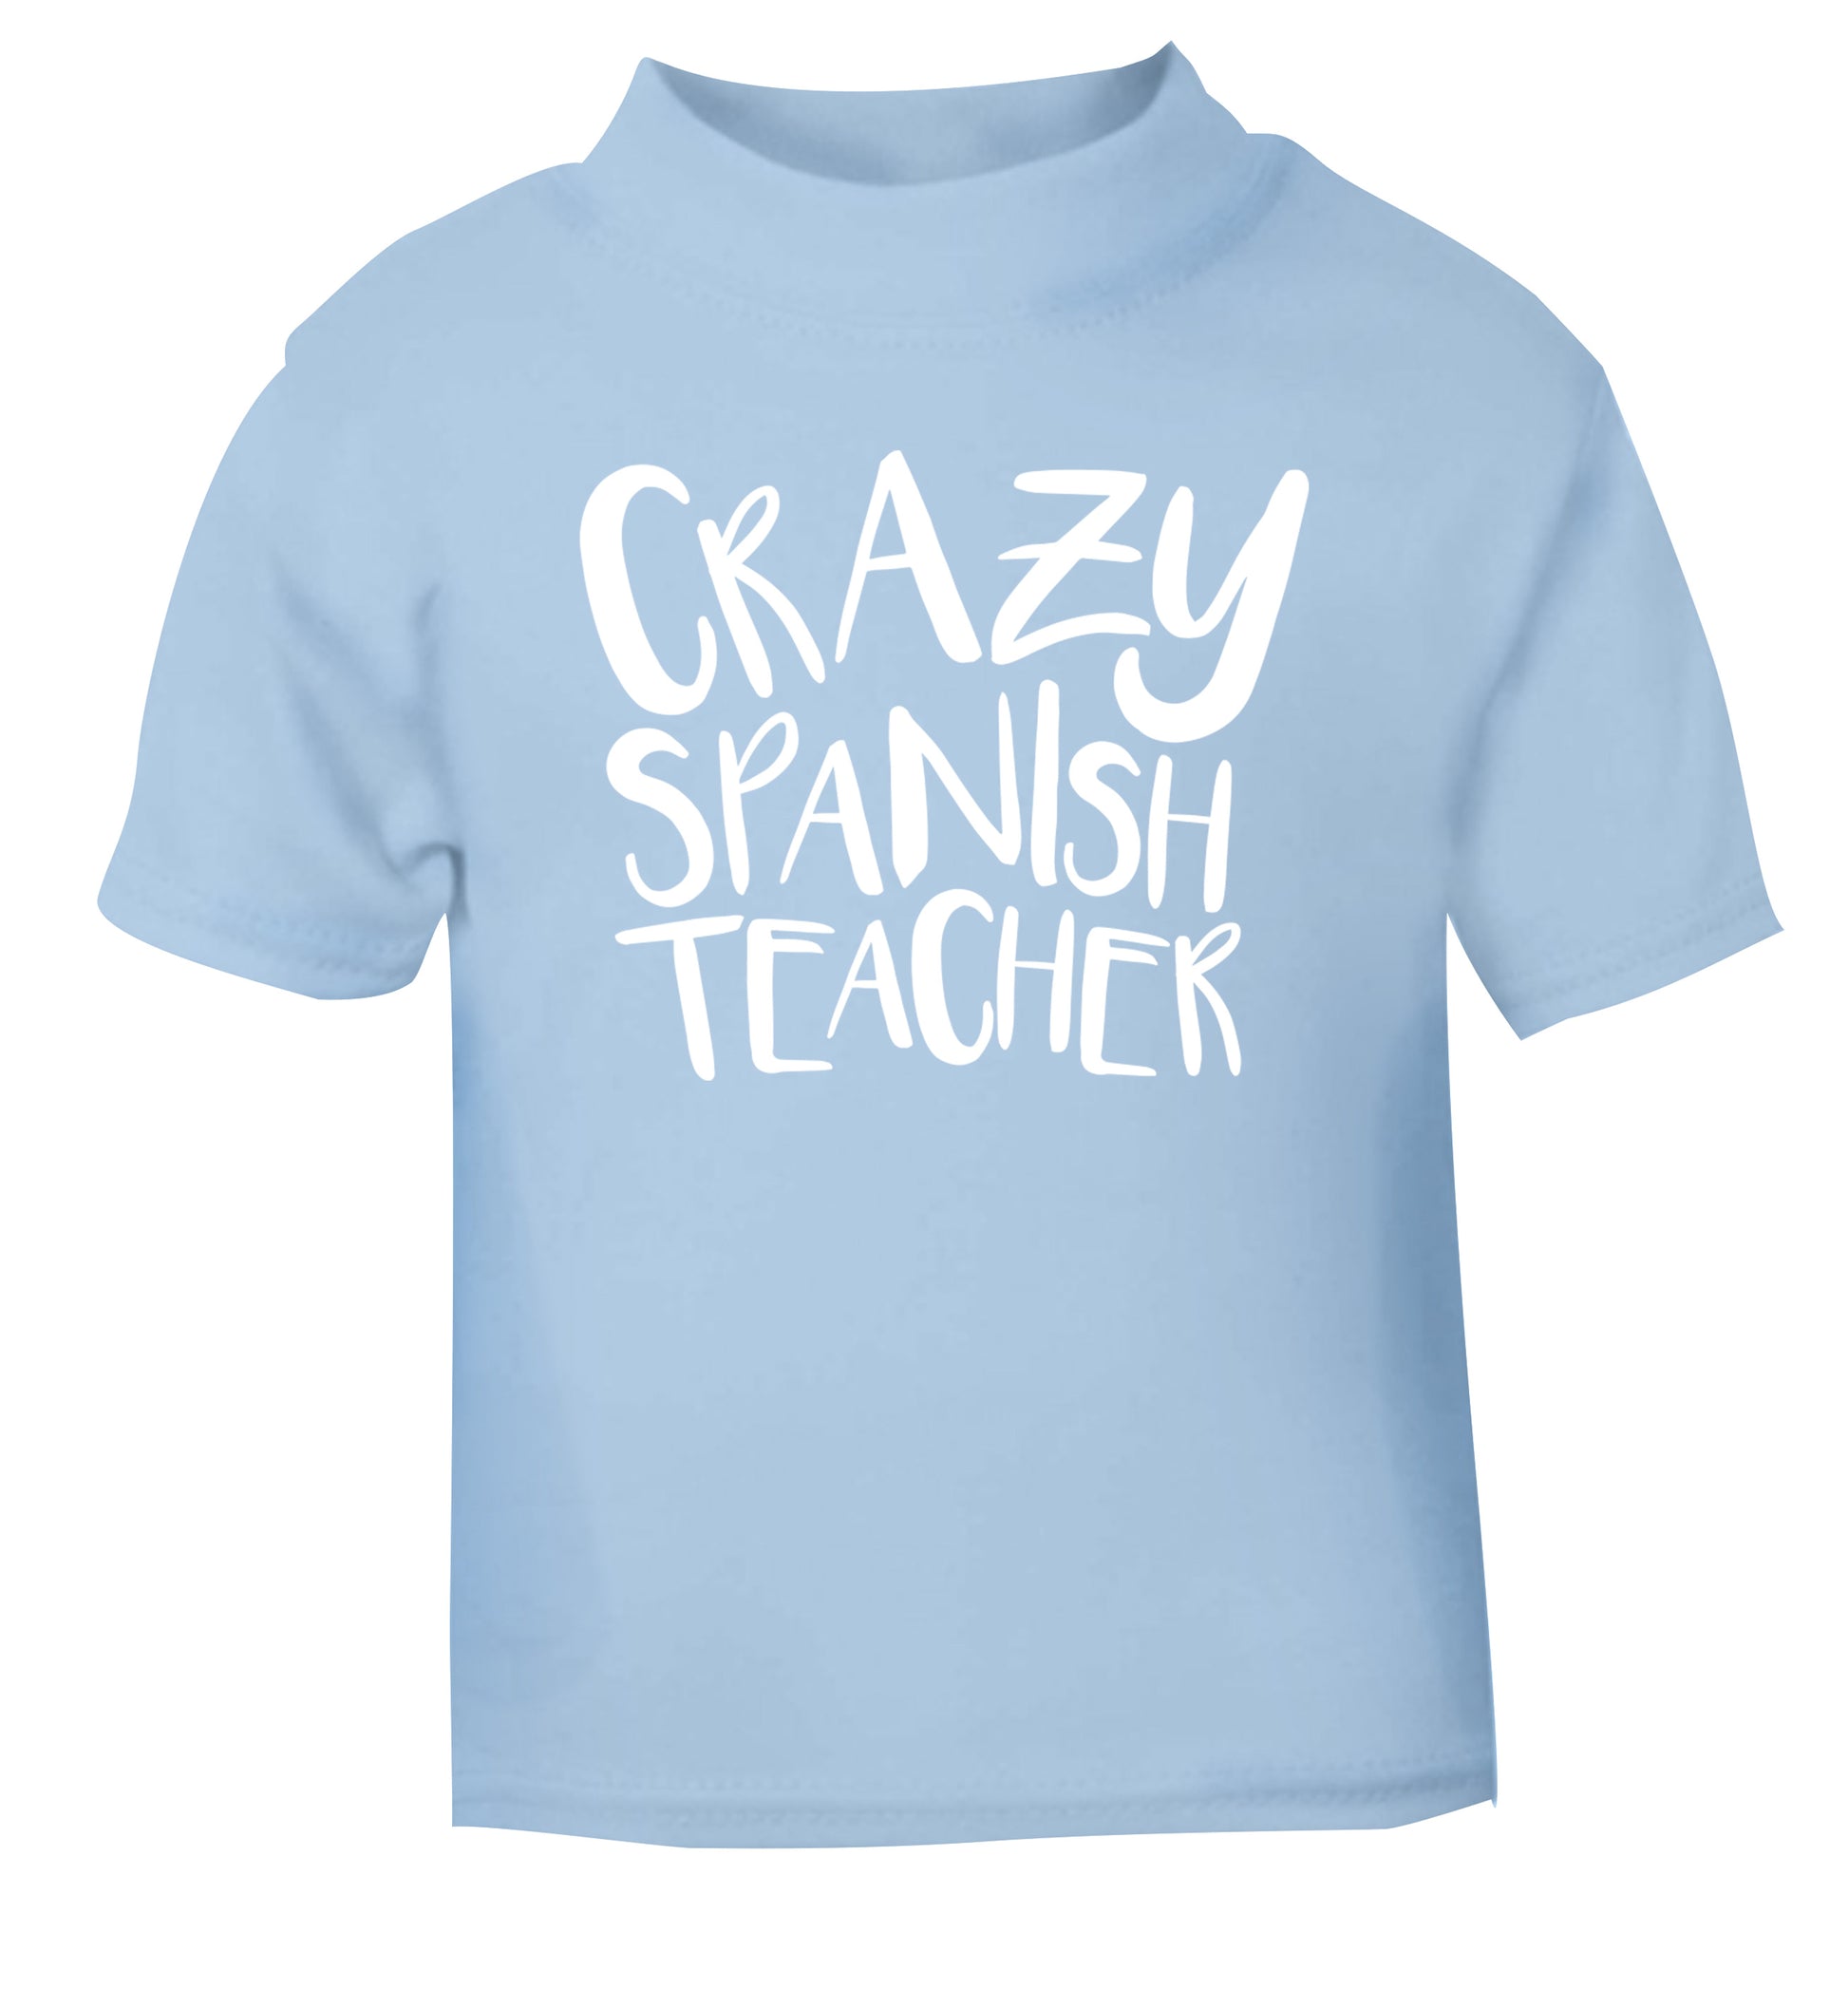 Crazy spanish teacher light blue Baby Toddler Tshirt 2 Years